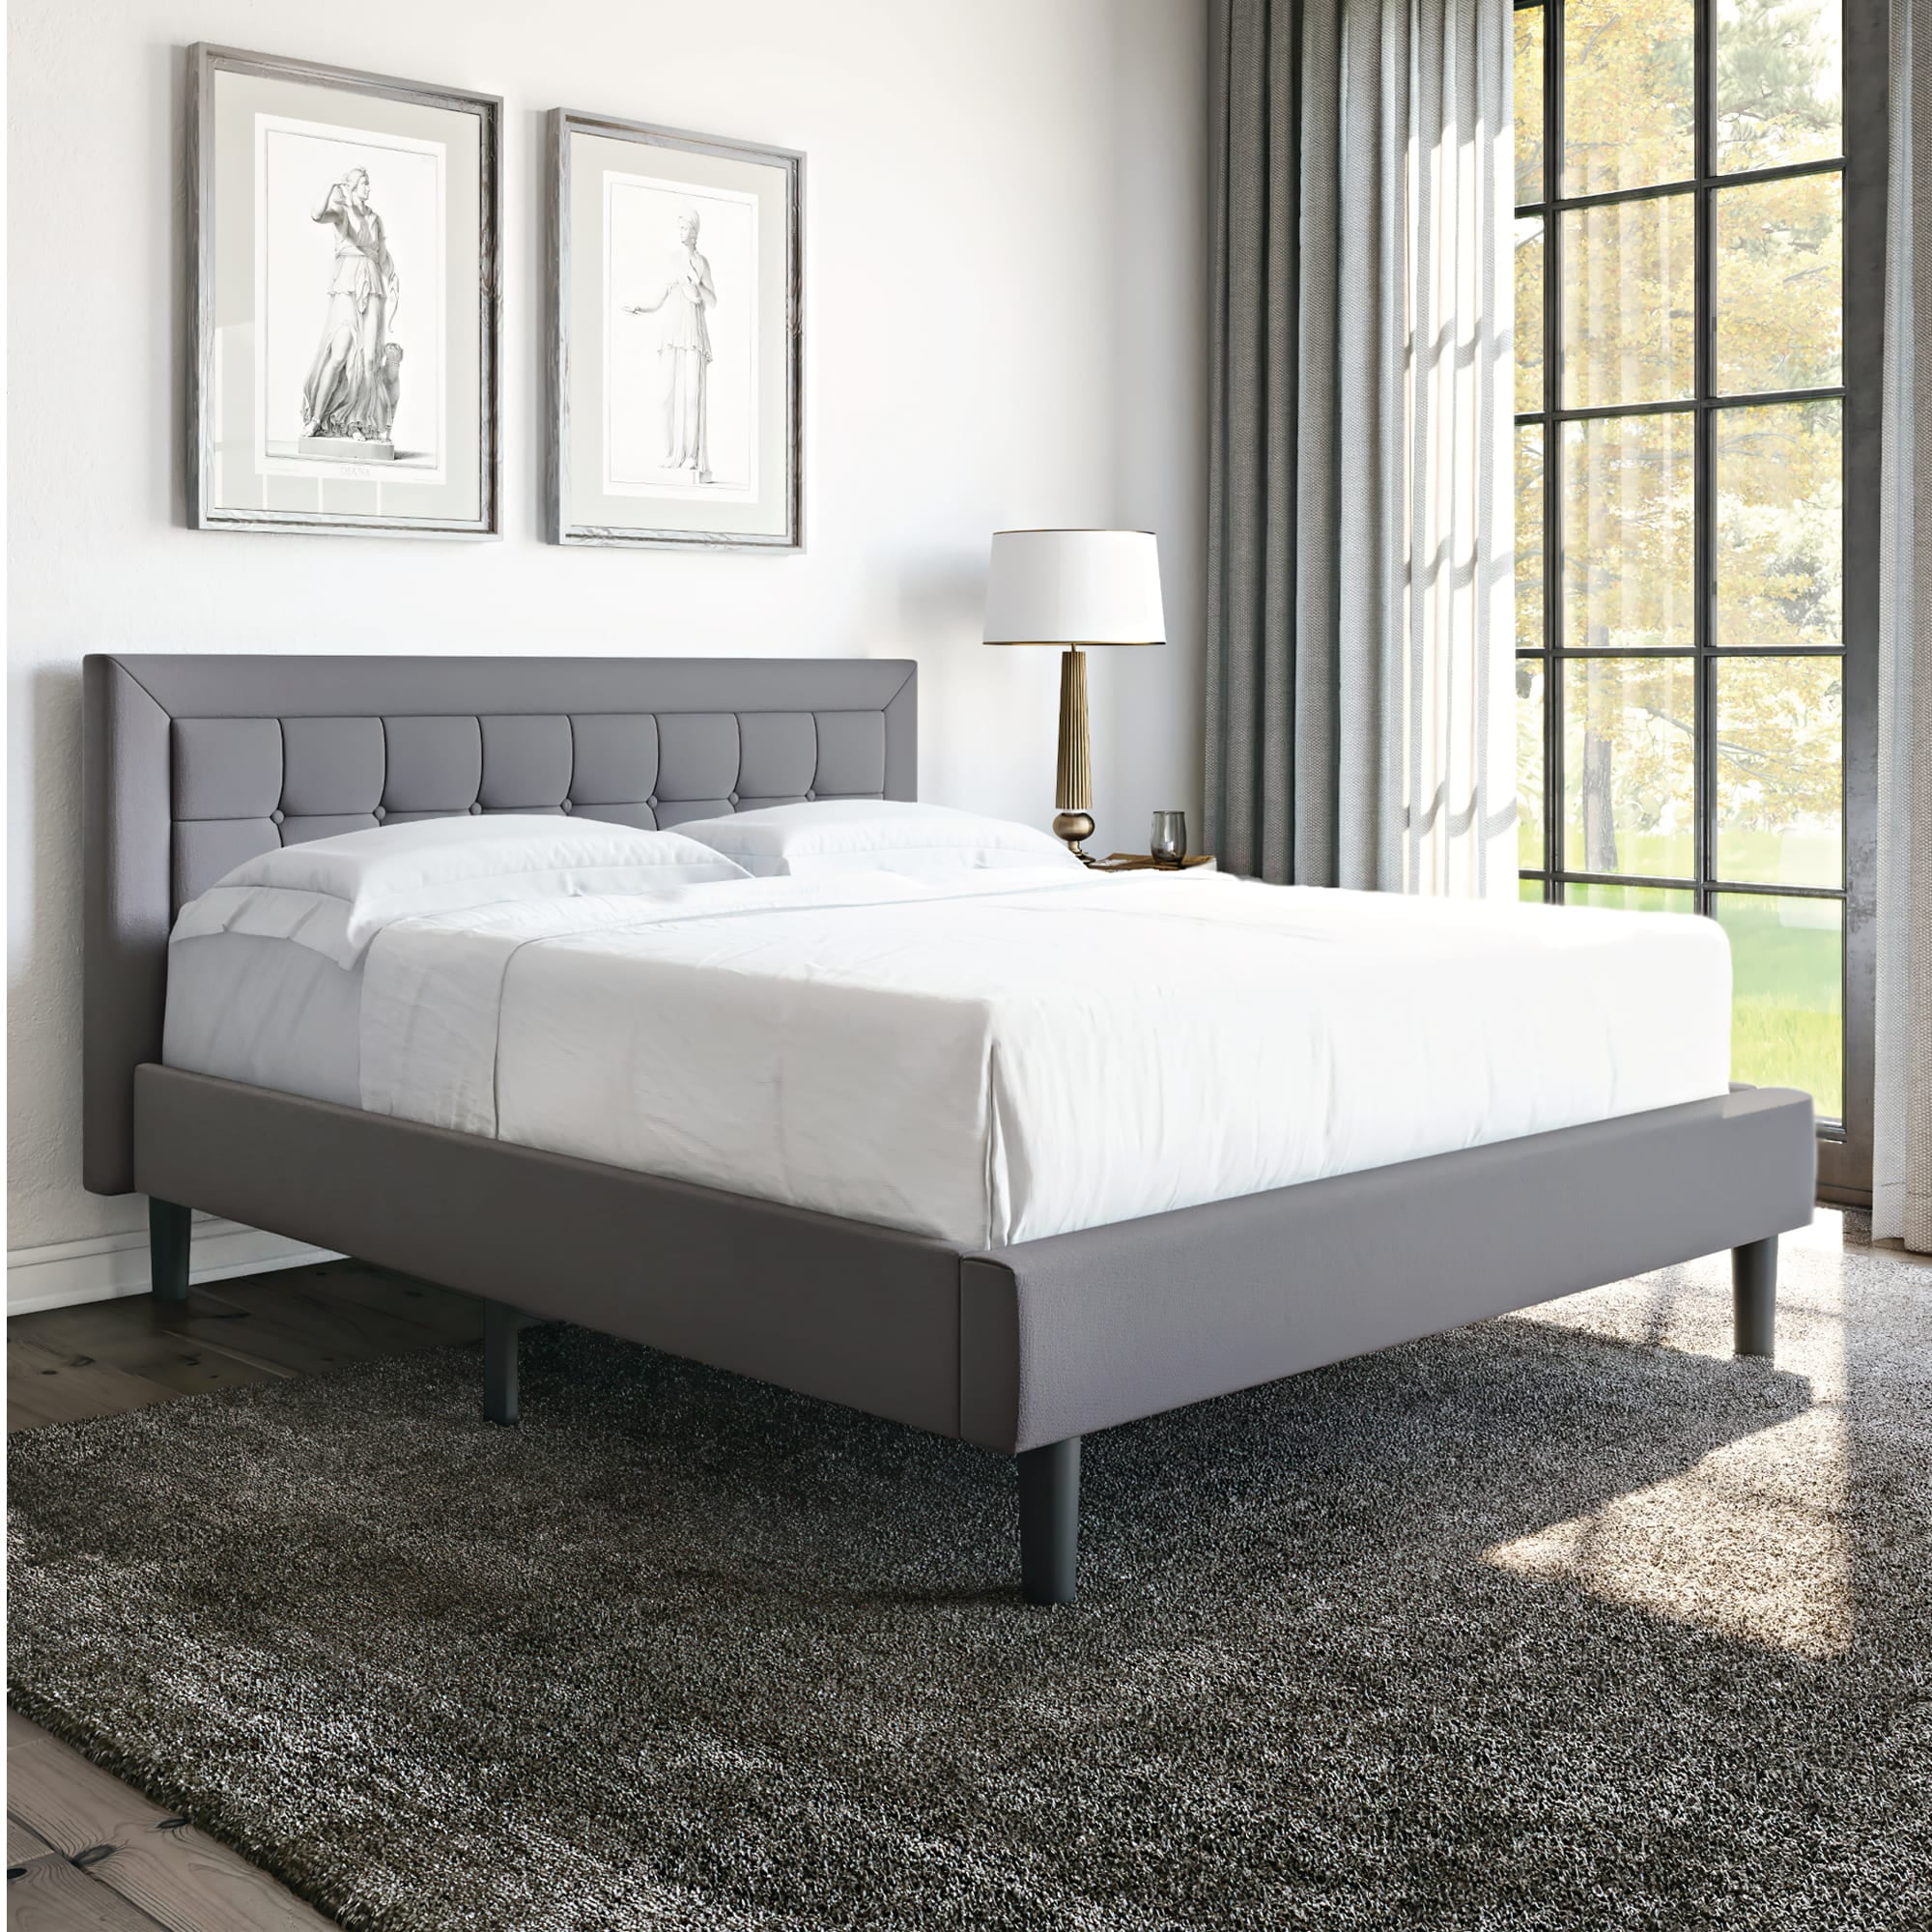 Modern Sleep Mornington Upholstered, King Size Upholstered Bed Frame With Wood Slats Platform Headboard Charcoal